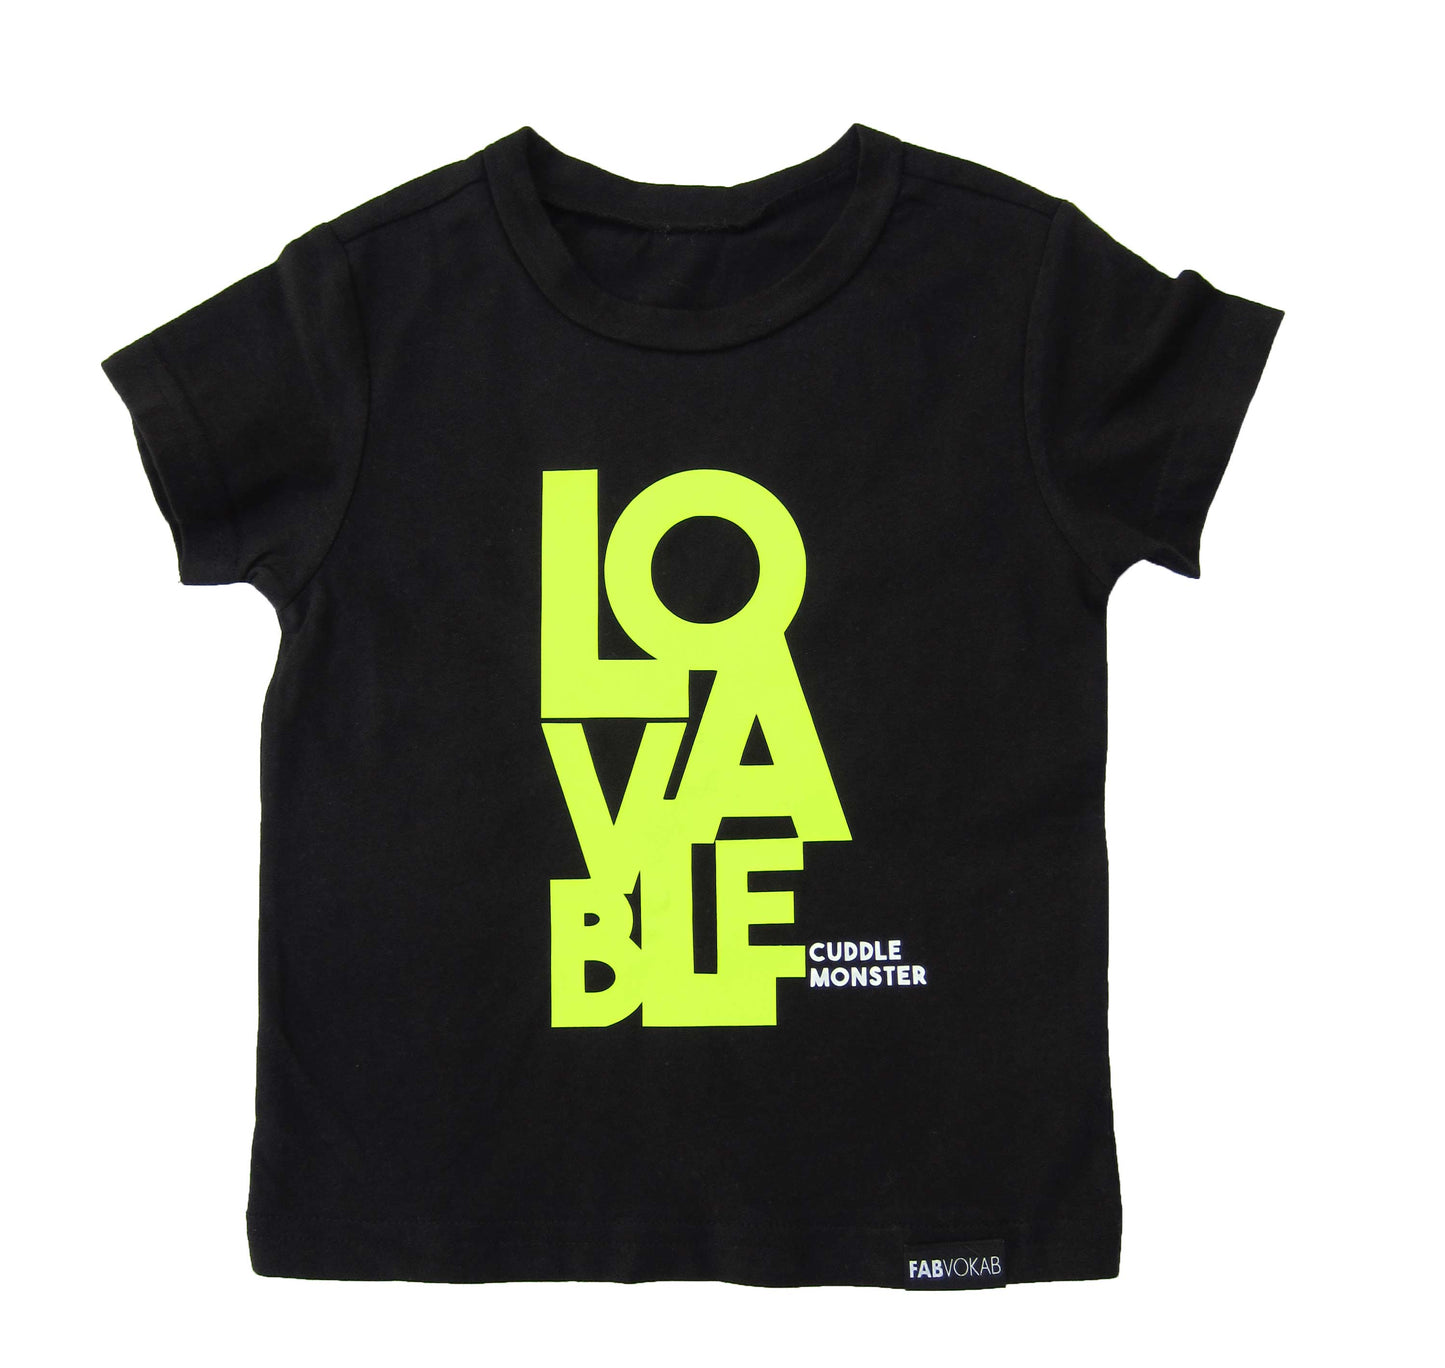 LOVABLE (CUDDLE MONSTER) VIBRANT NEON GREEN Short Sleeve T-shirt FABVOKAB